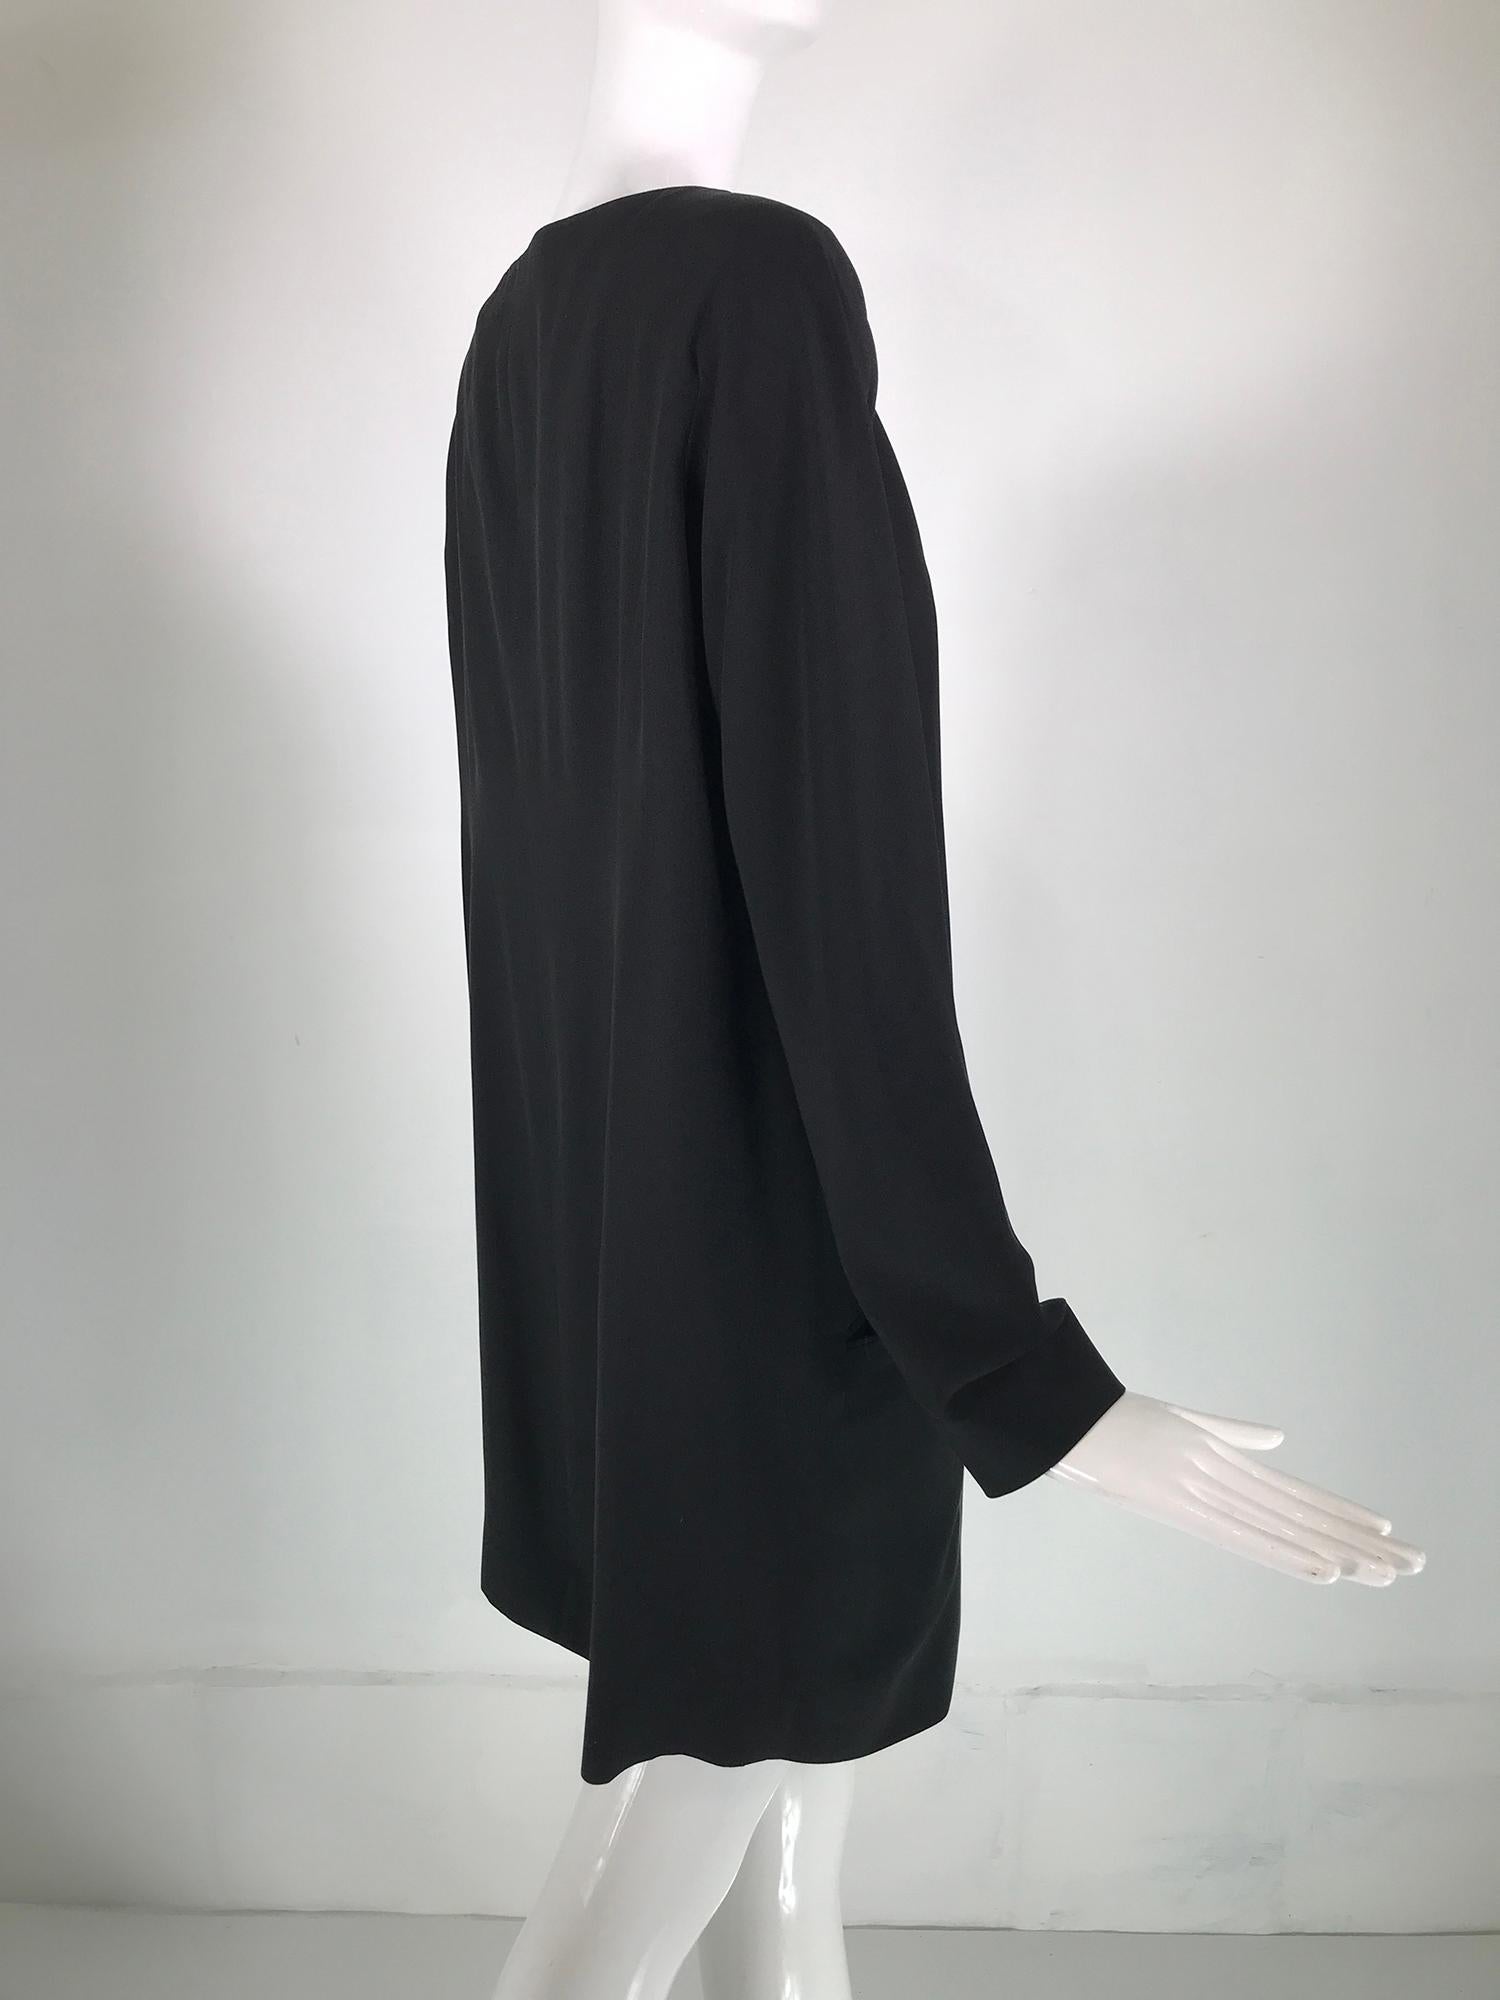  Donna Karan Black Silk Crepe Open Front Jacket With Pockets 1980s For Sale 4